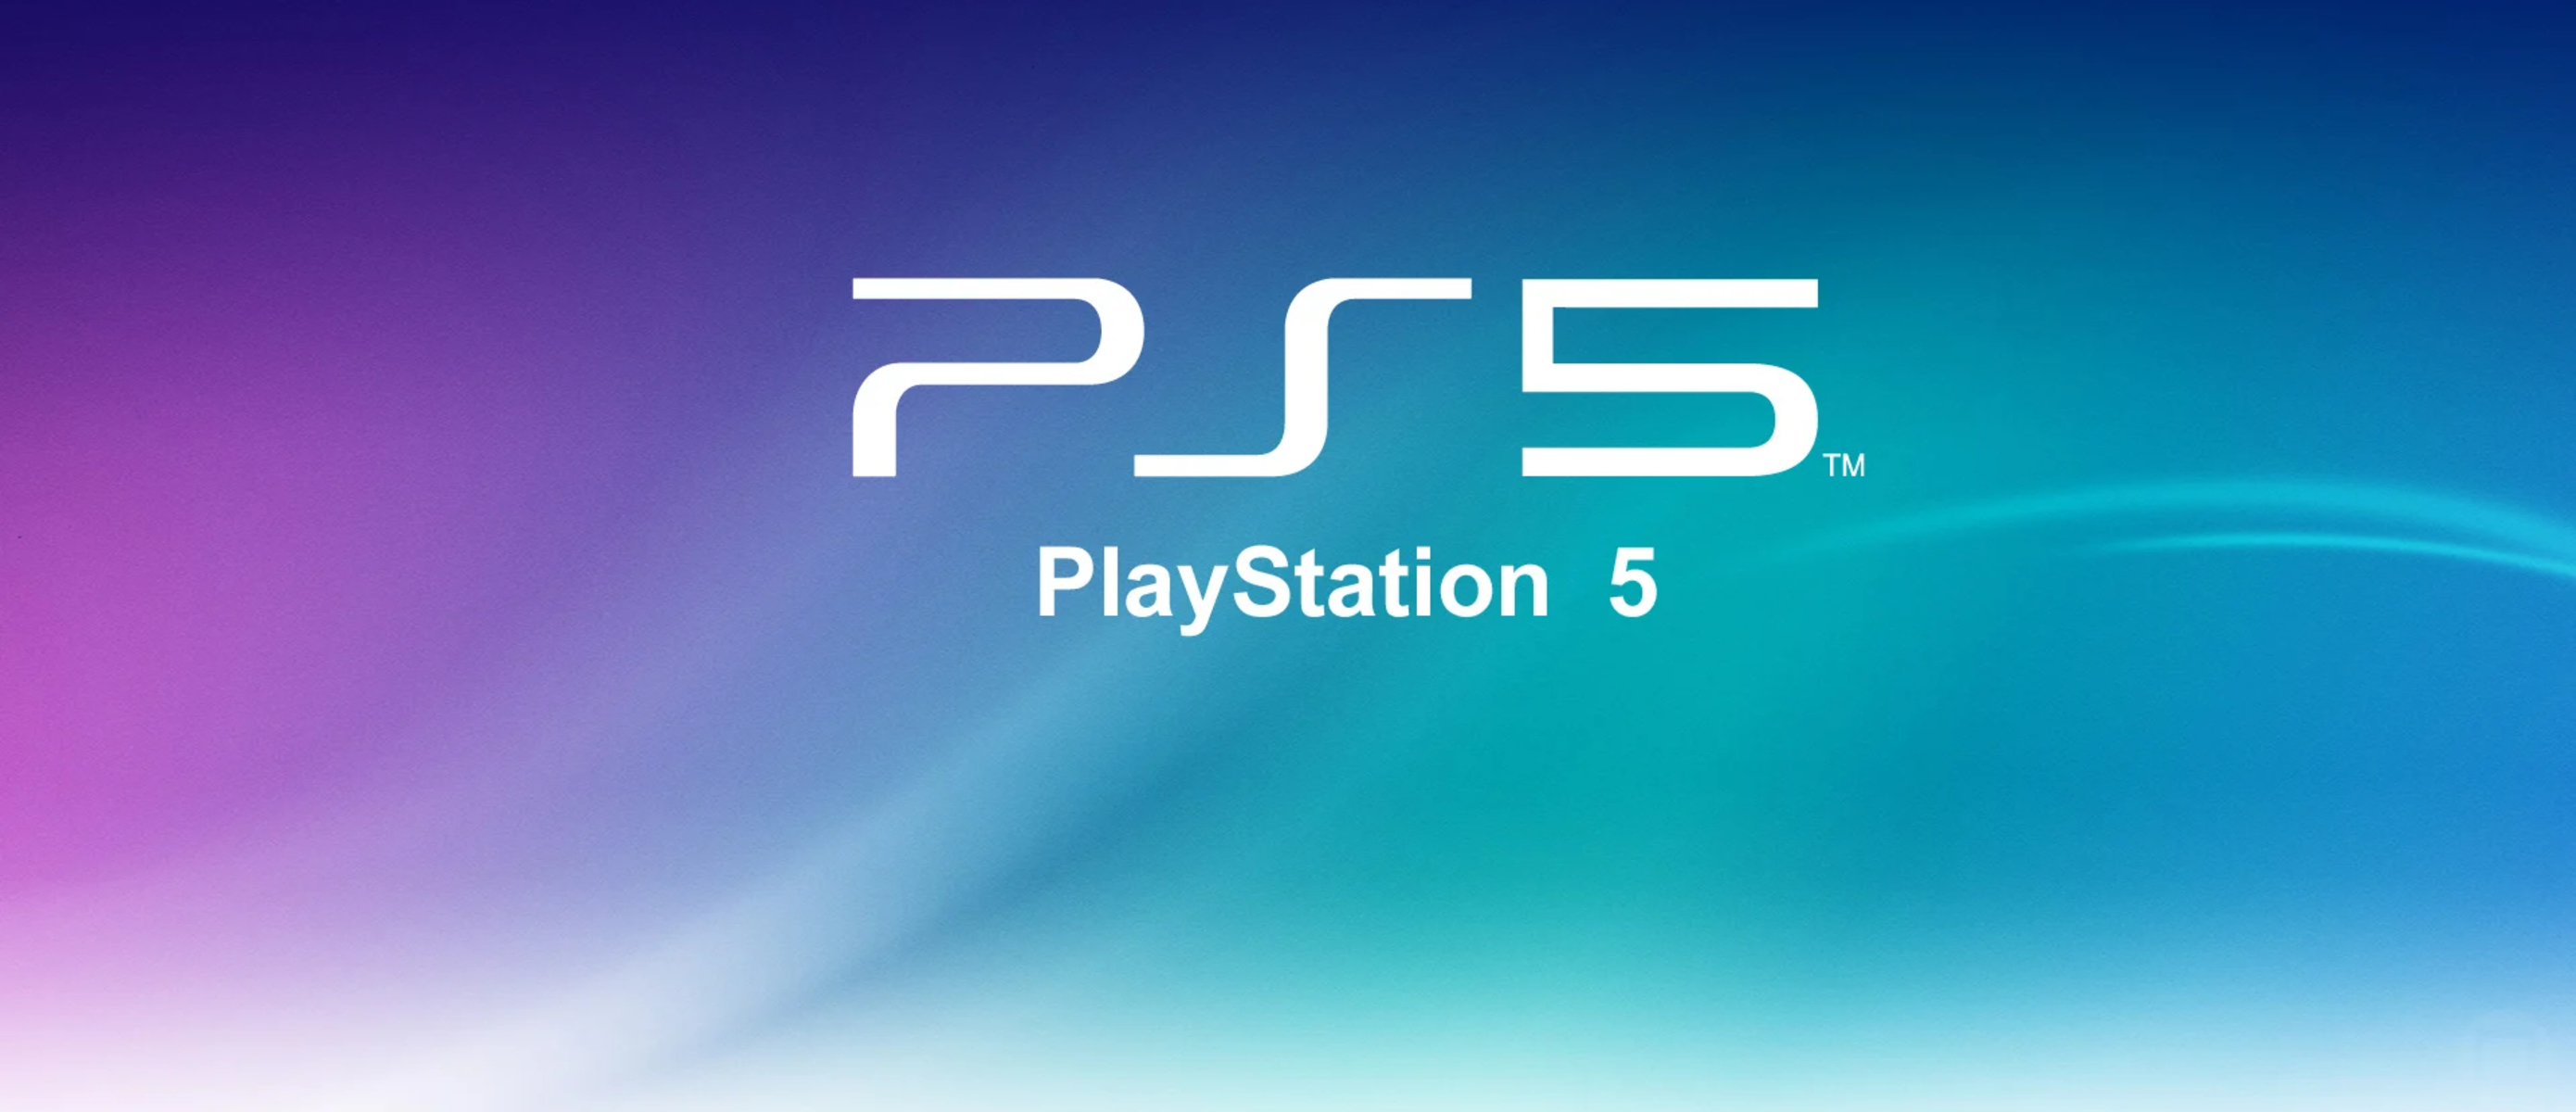 Ps5 ютубе. Sony PLAYSTATION 5. Ps5 логотип. PLAYSTATION 5 обои. PLAYSTATION 5 логотип.